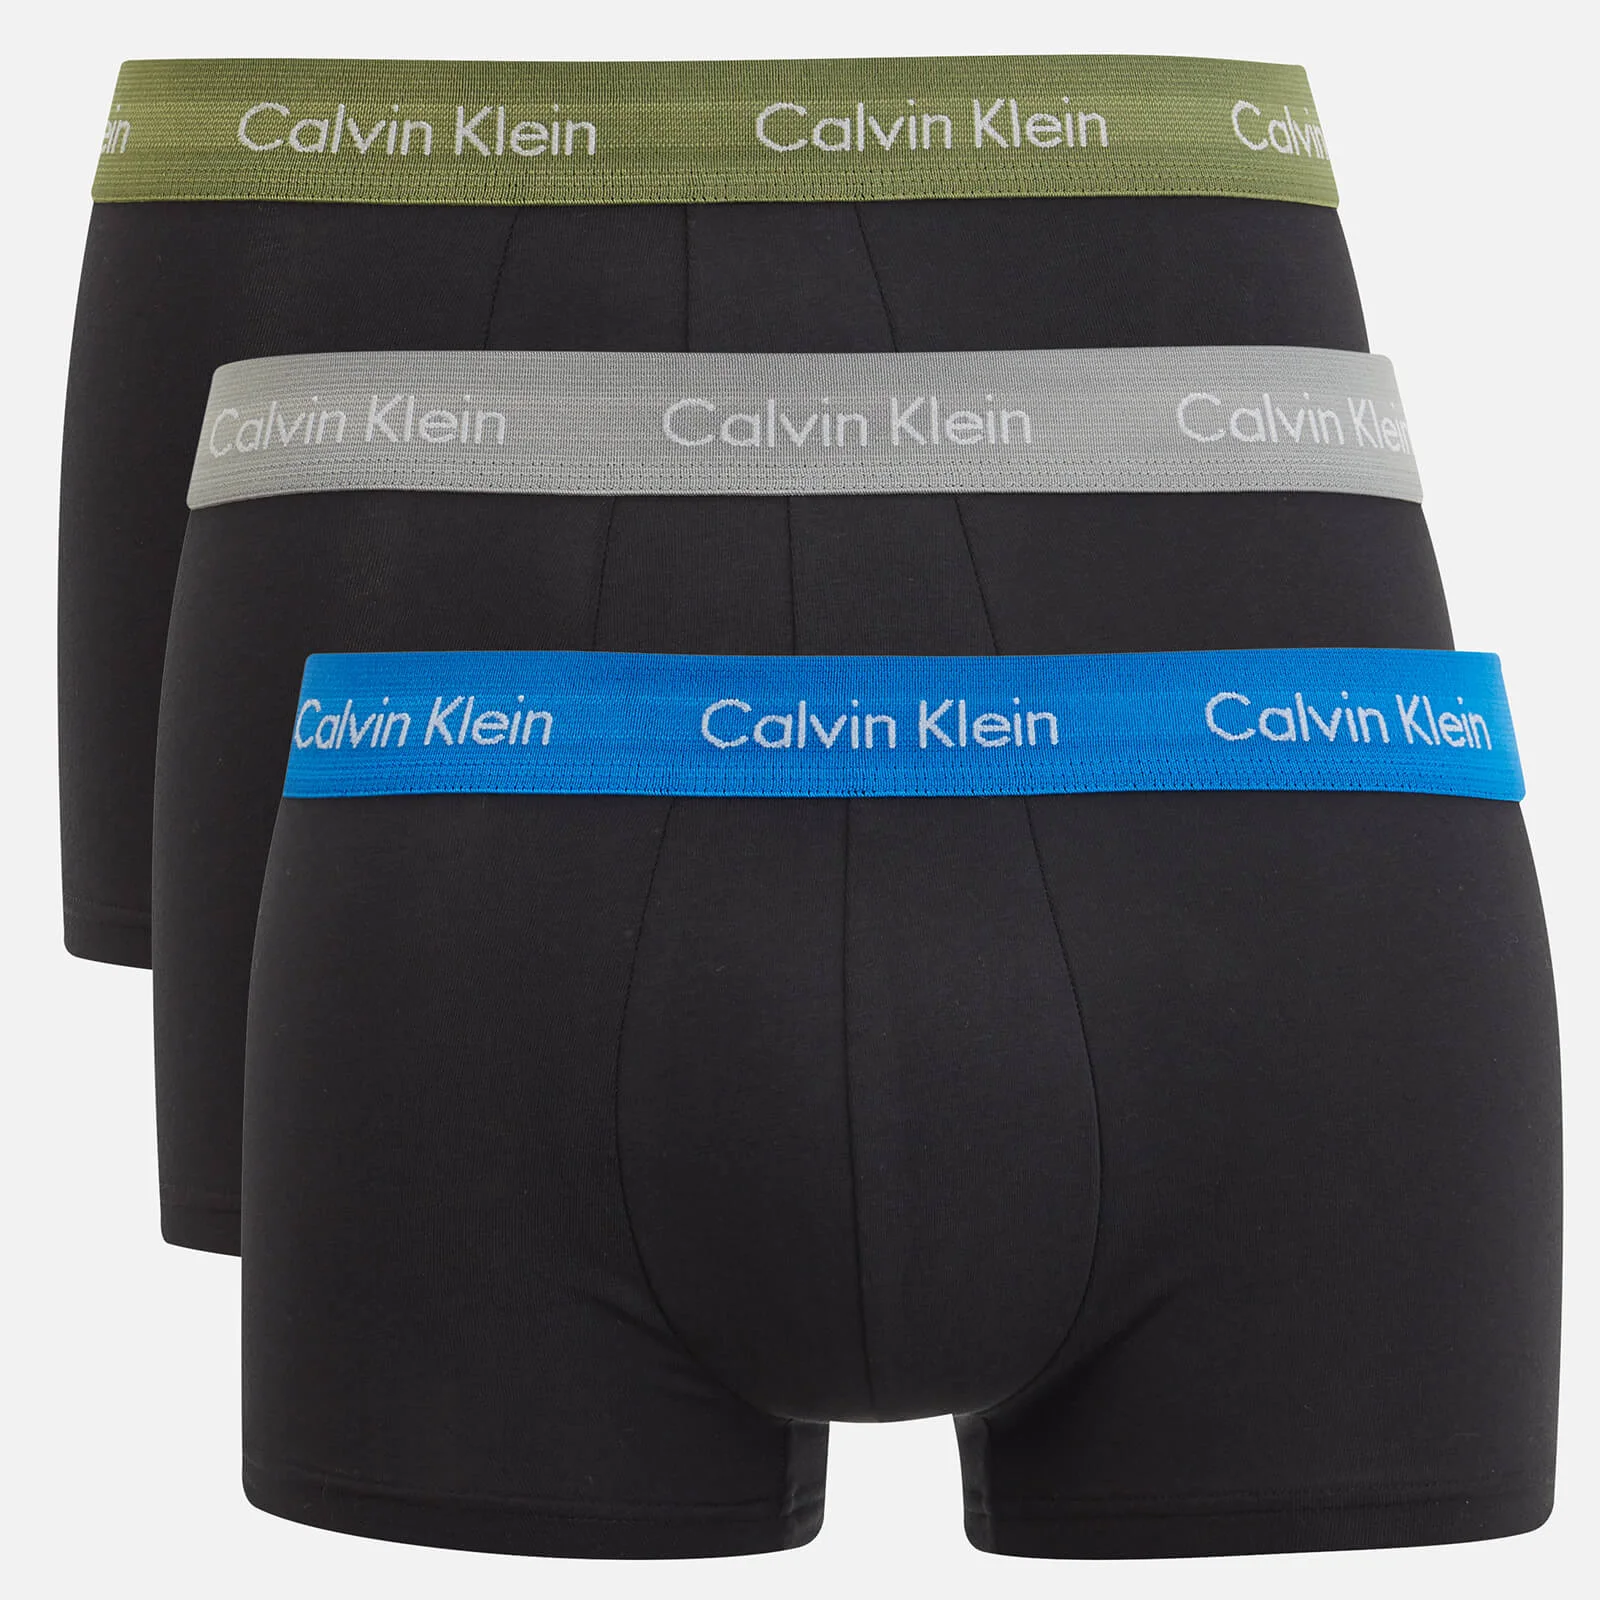 Calvin Klein Men's 3 Pack Trunk Boxer Shorts - Black/Olivine Black/Skyview Black/Medium Grey Image 1